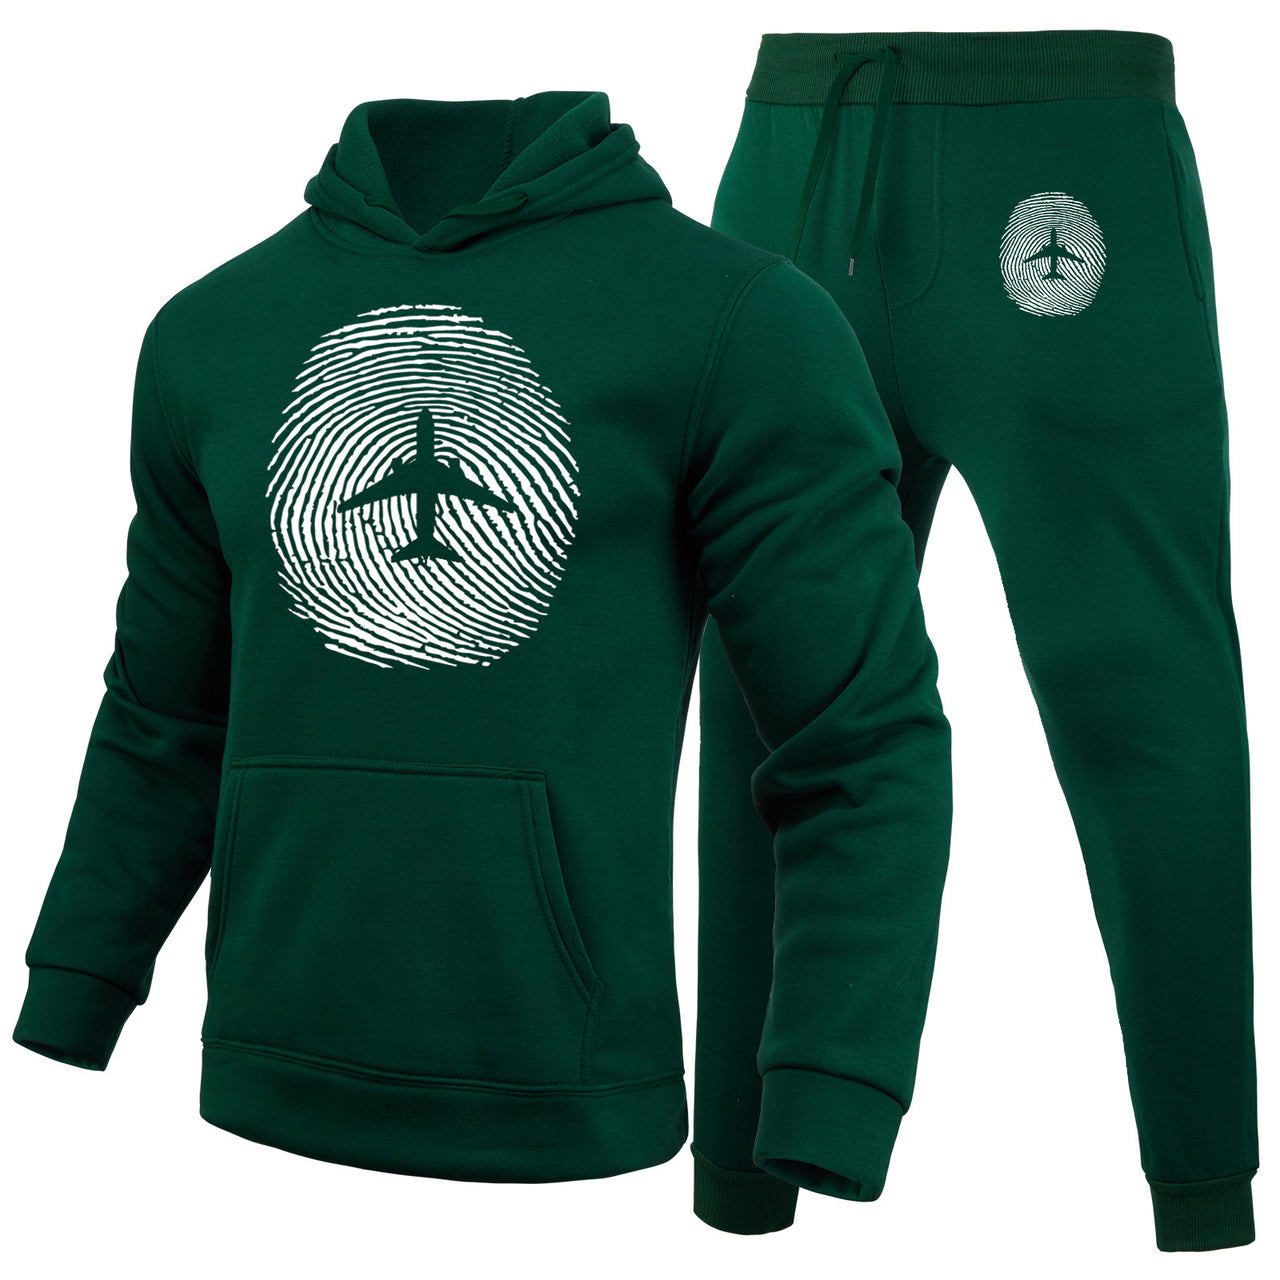 Aviation Finger Print Designed Hoodies & Sweatpants Set